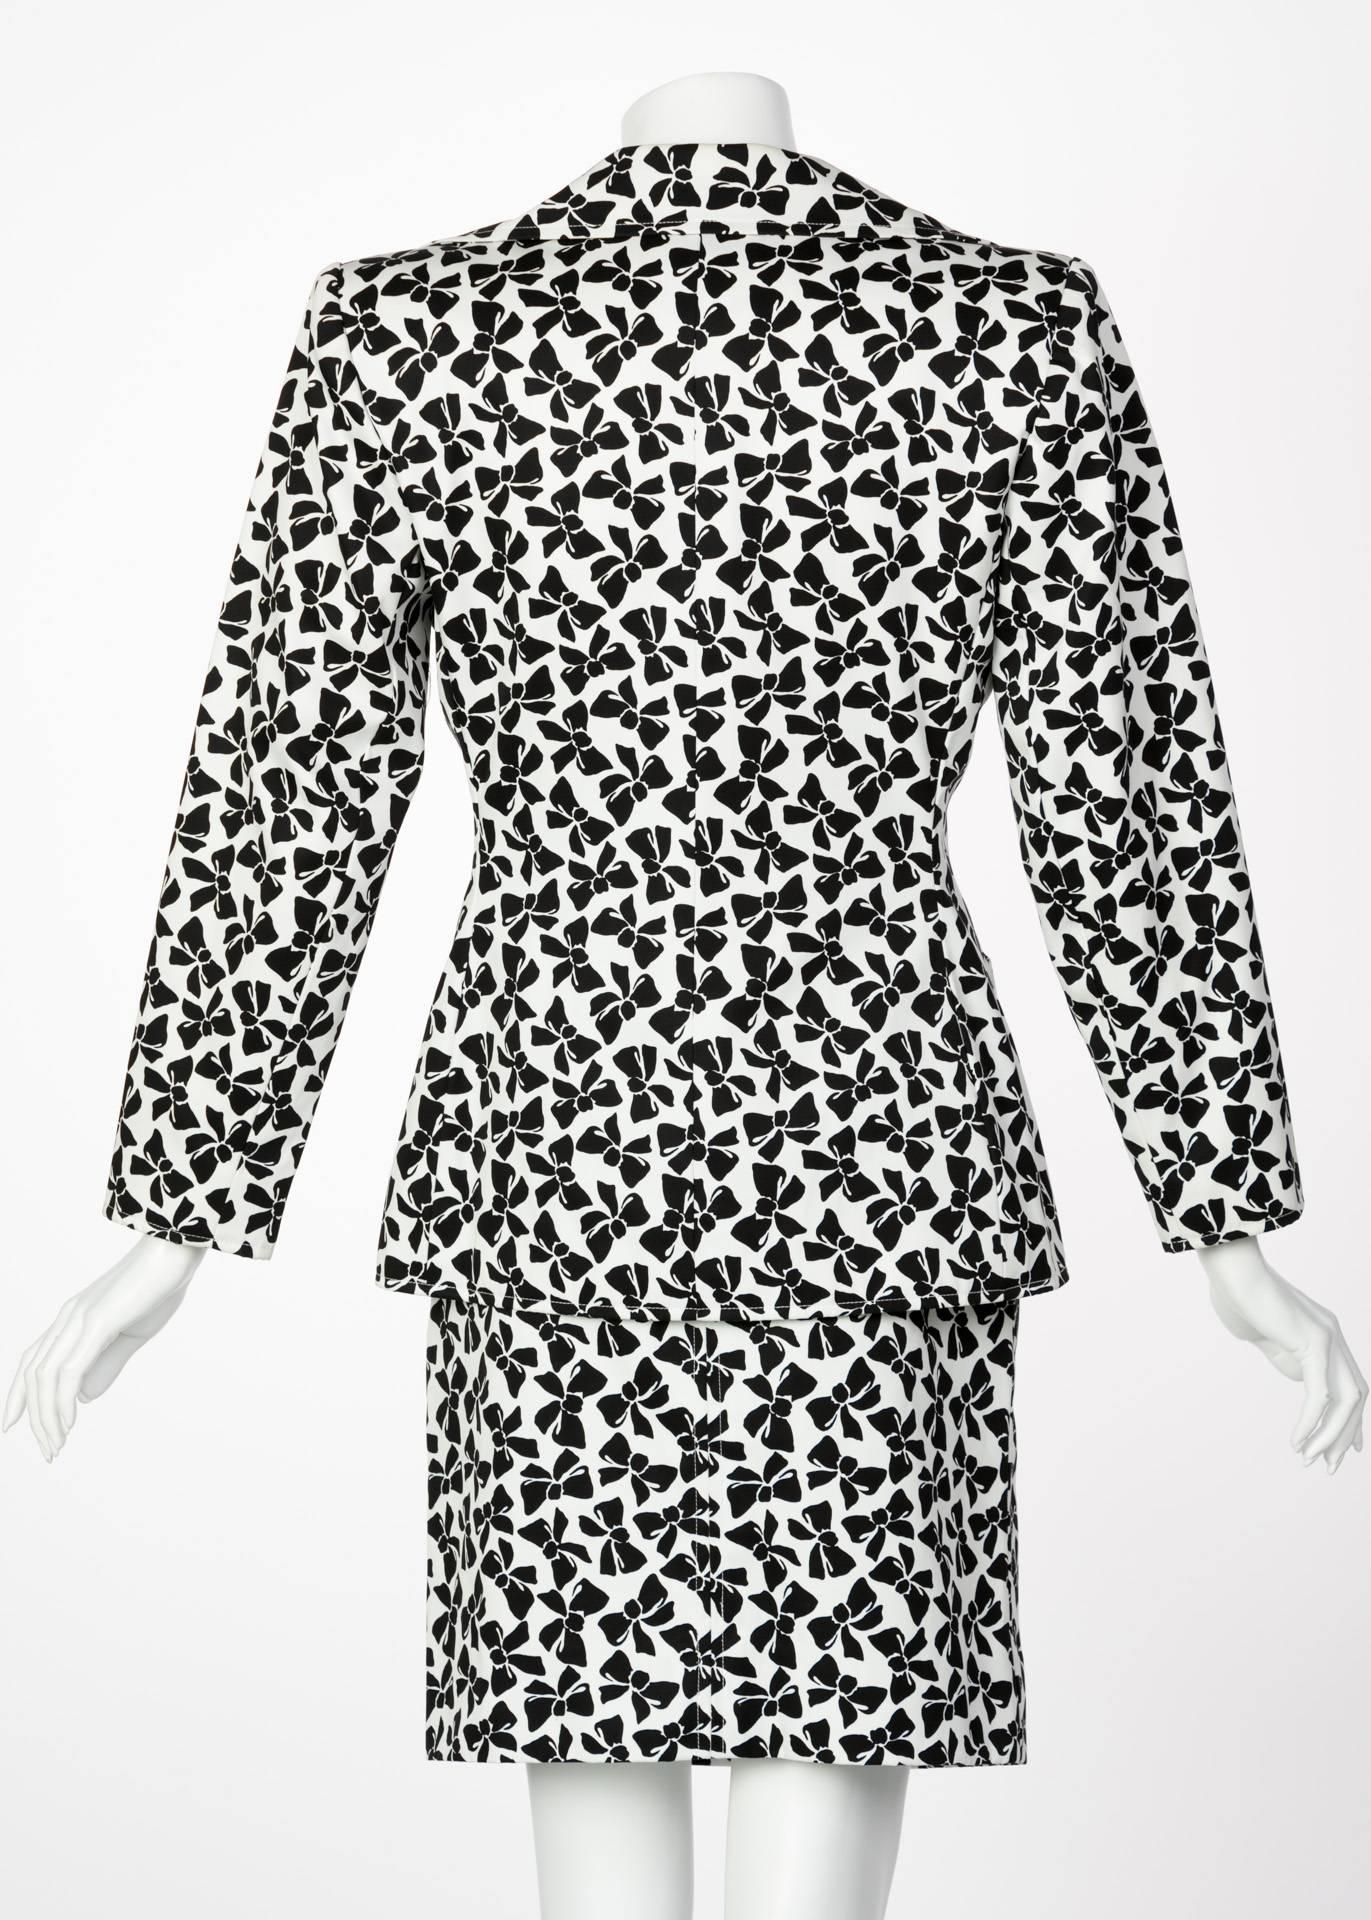 Women's Yves Saint Laurent Cotton Black and White Bow print Skirt Suit, 1980s 